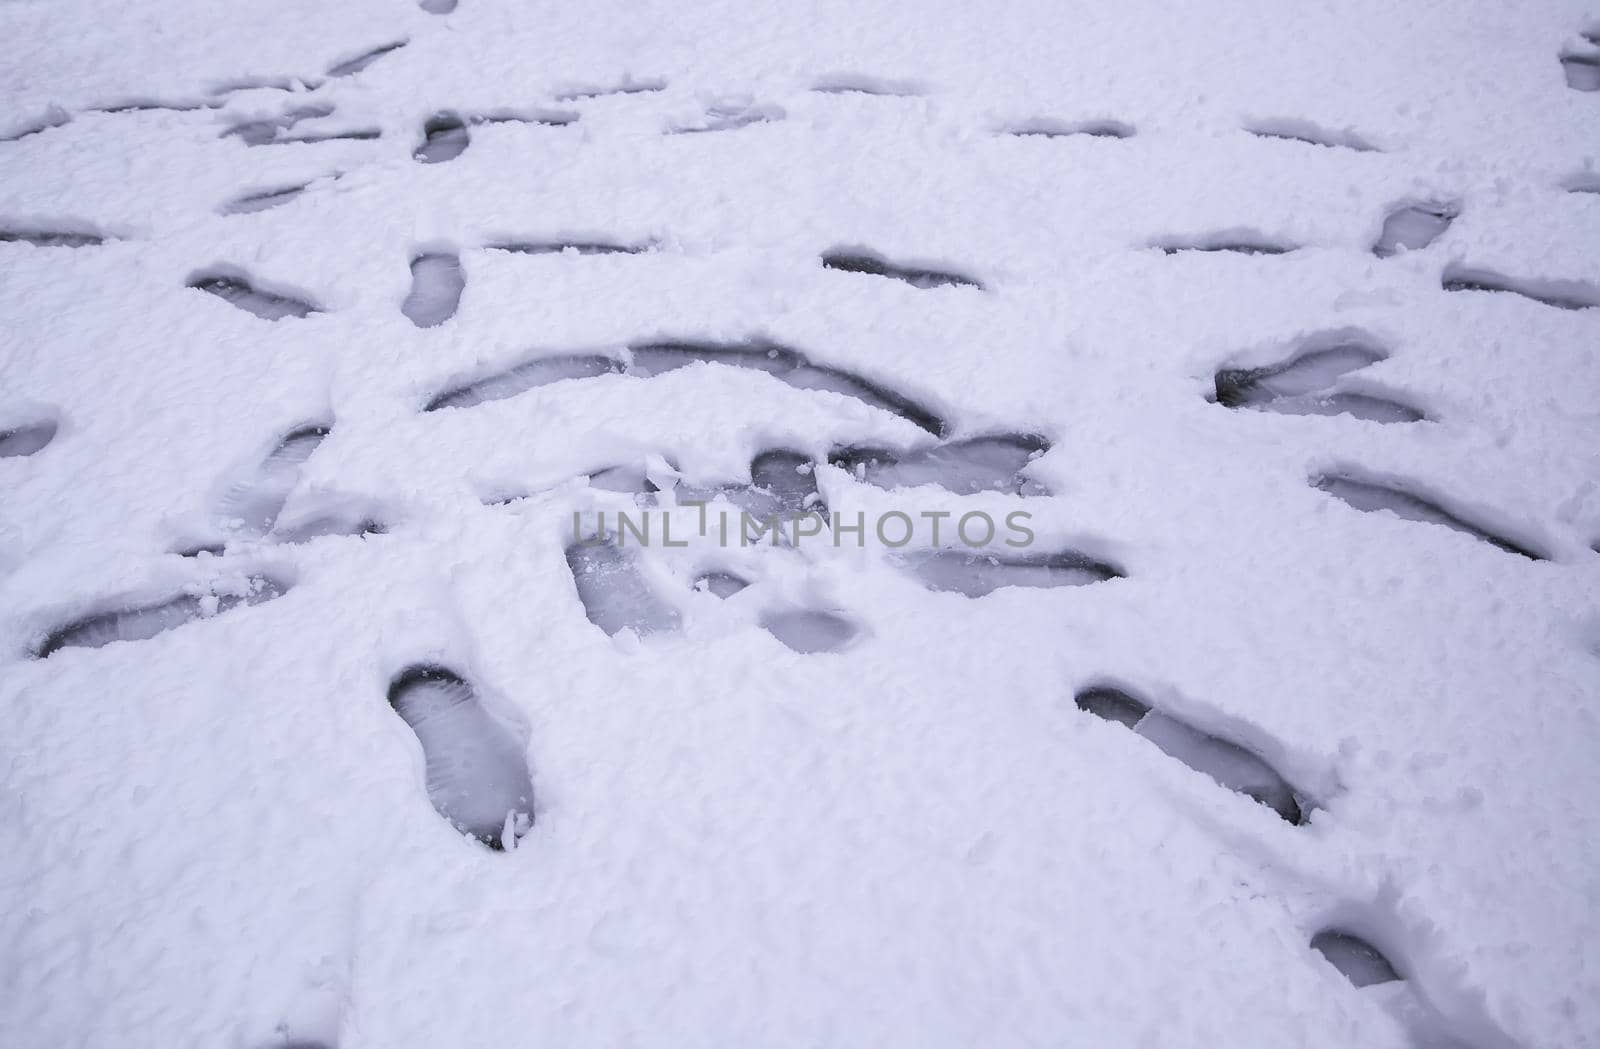 Footprints in the snow by esebene